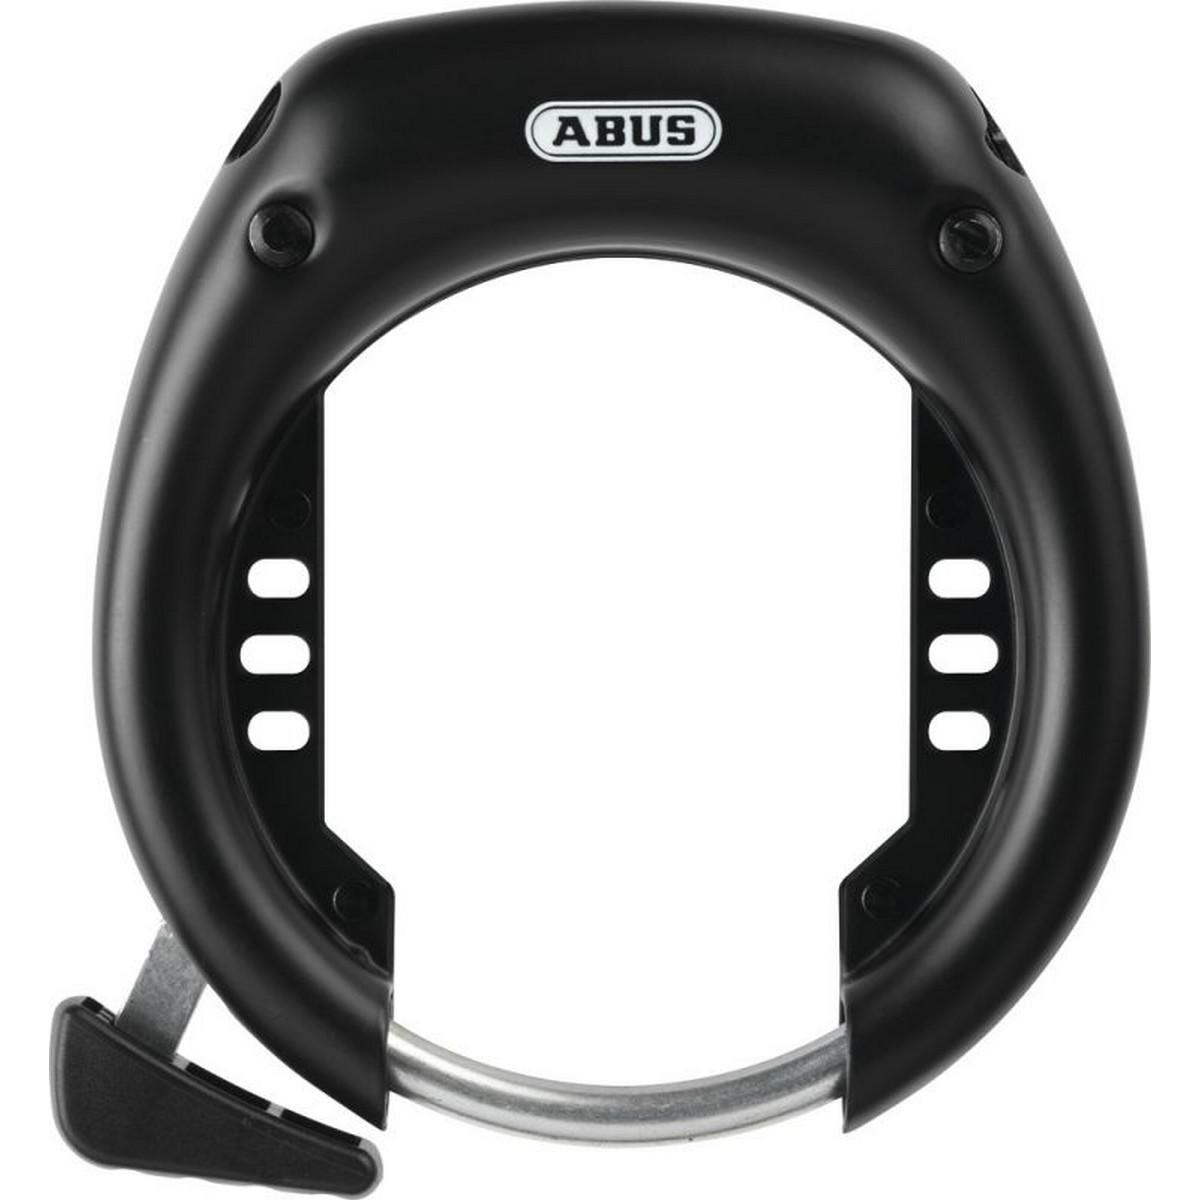 Abus Pro Shield X Plus 5955 patkó kerékpárzár